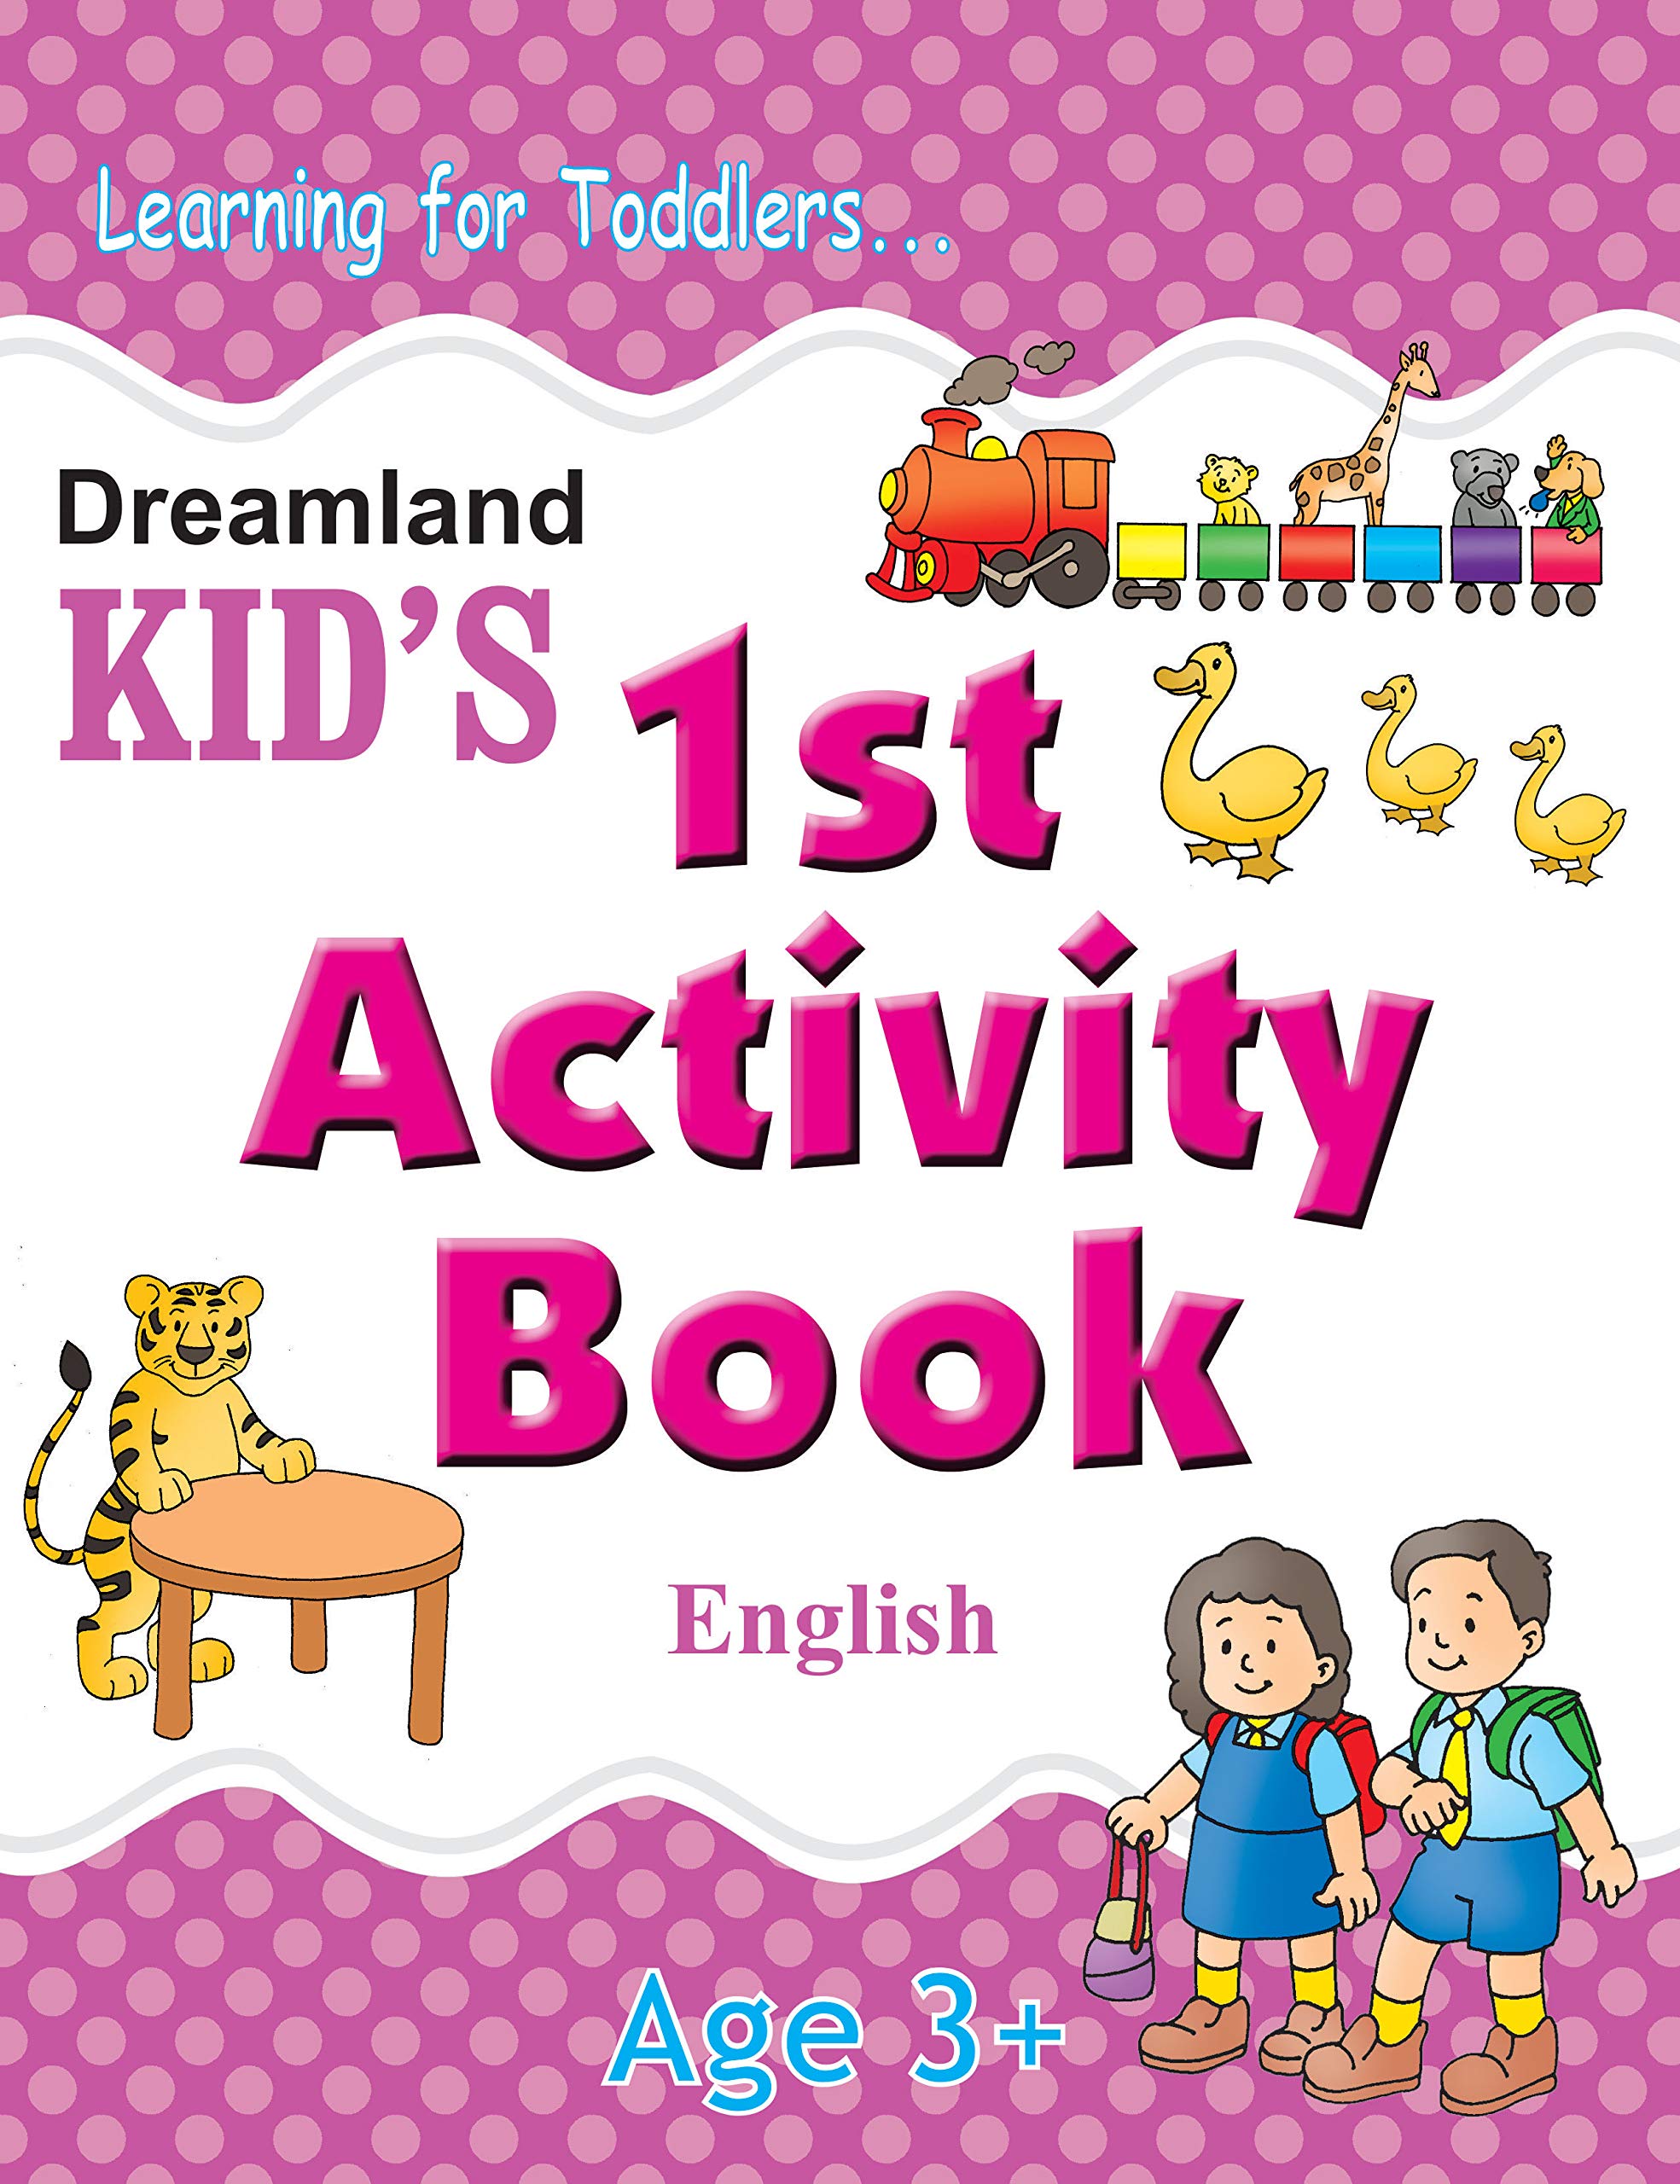 1st Activity Book - English